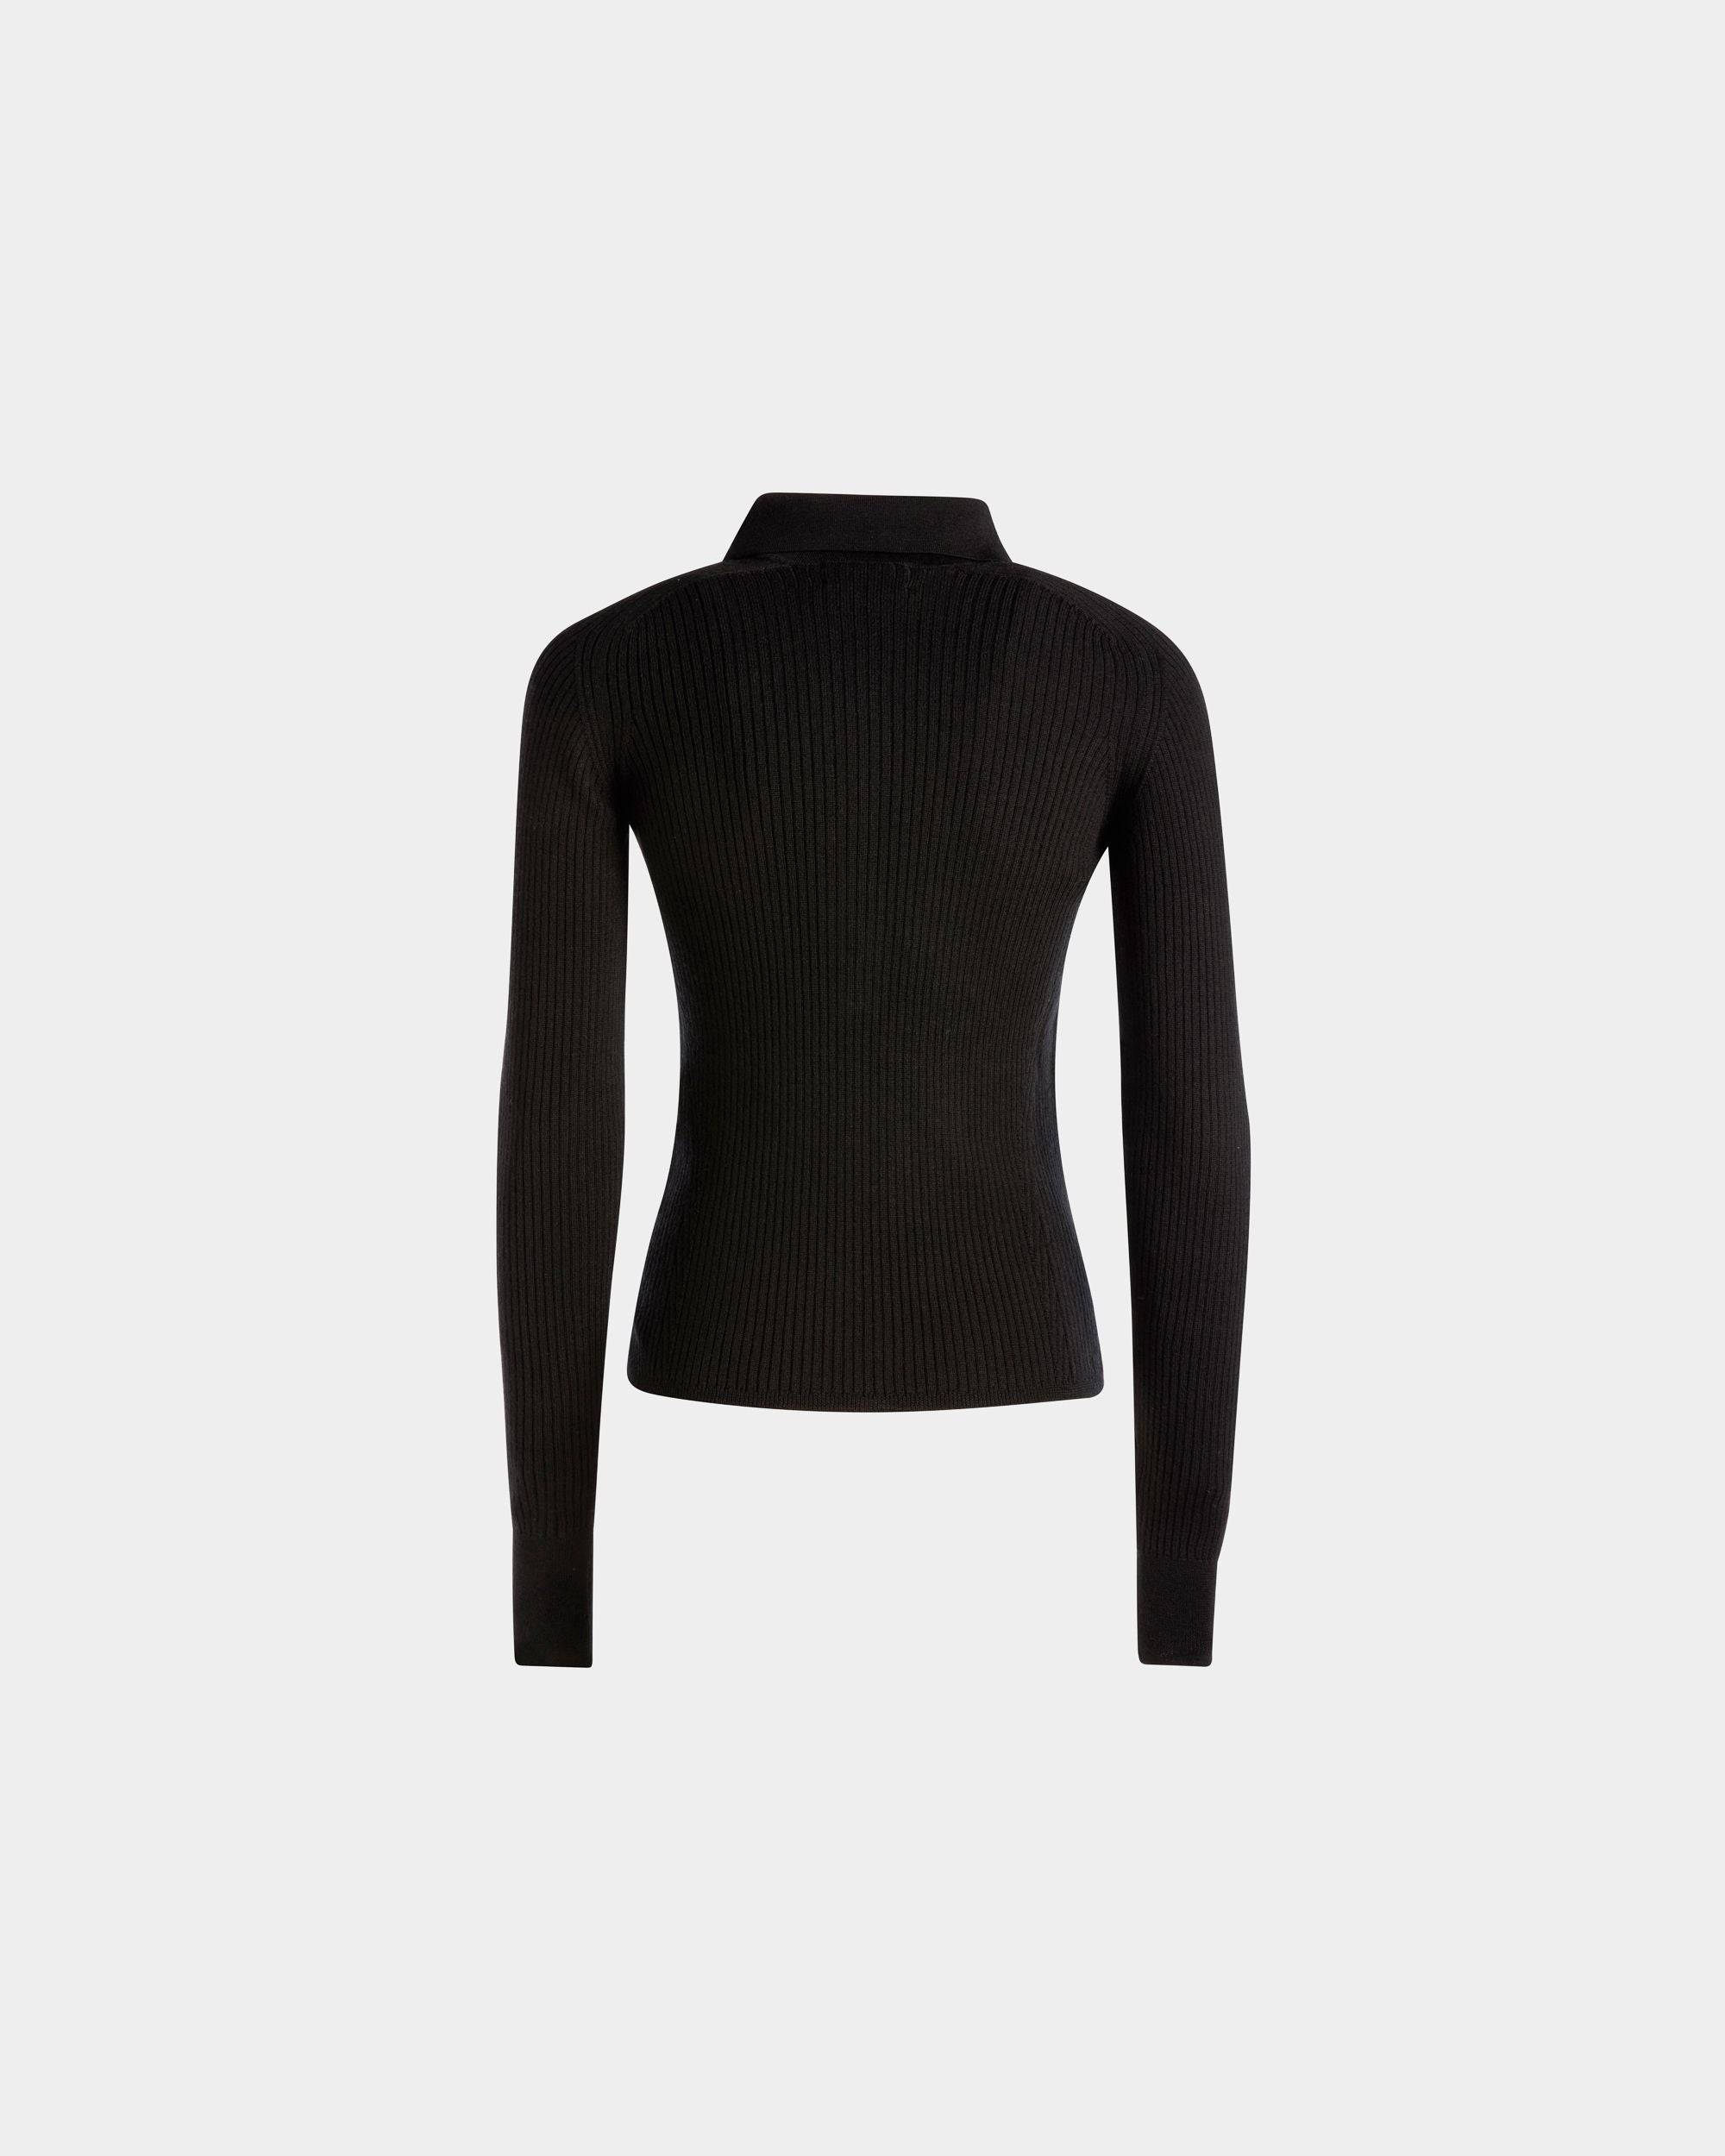 Langarm-Poloshirt | Poloshirt für Damen | Schwarze Wolle | Bally | Still Life Rückseite